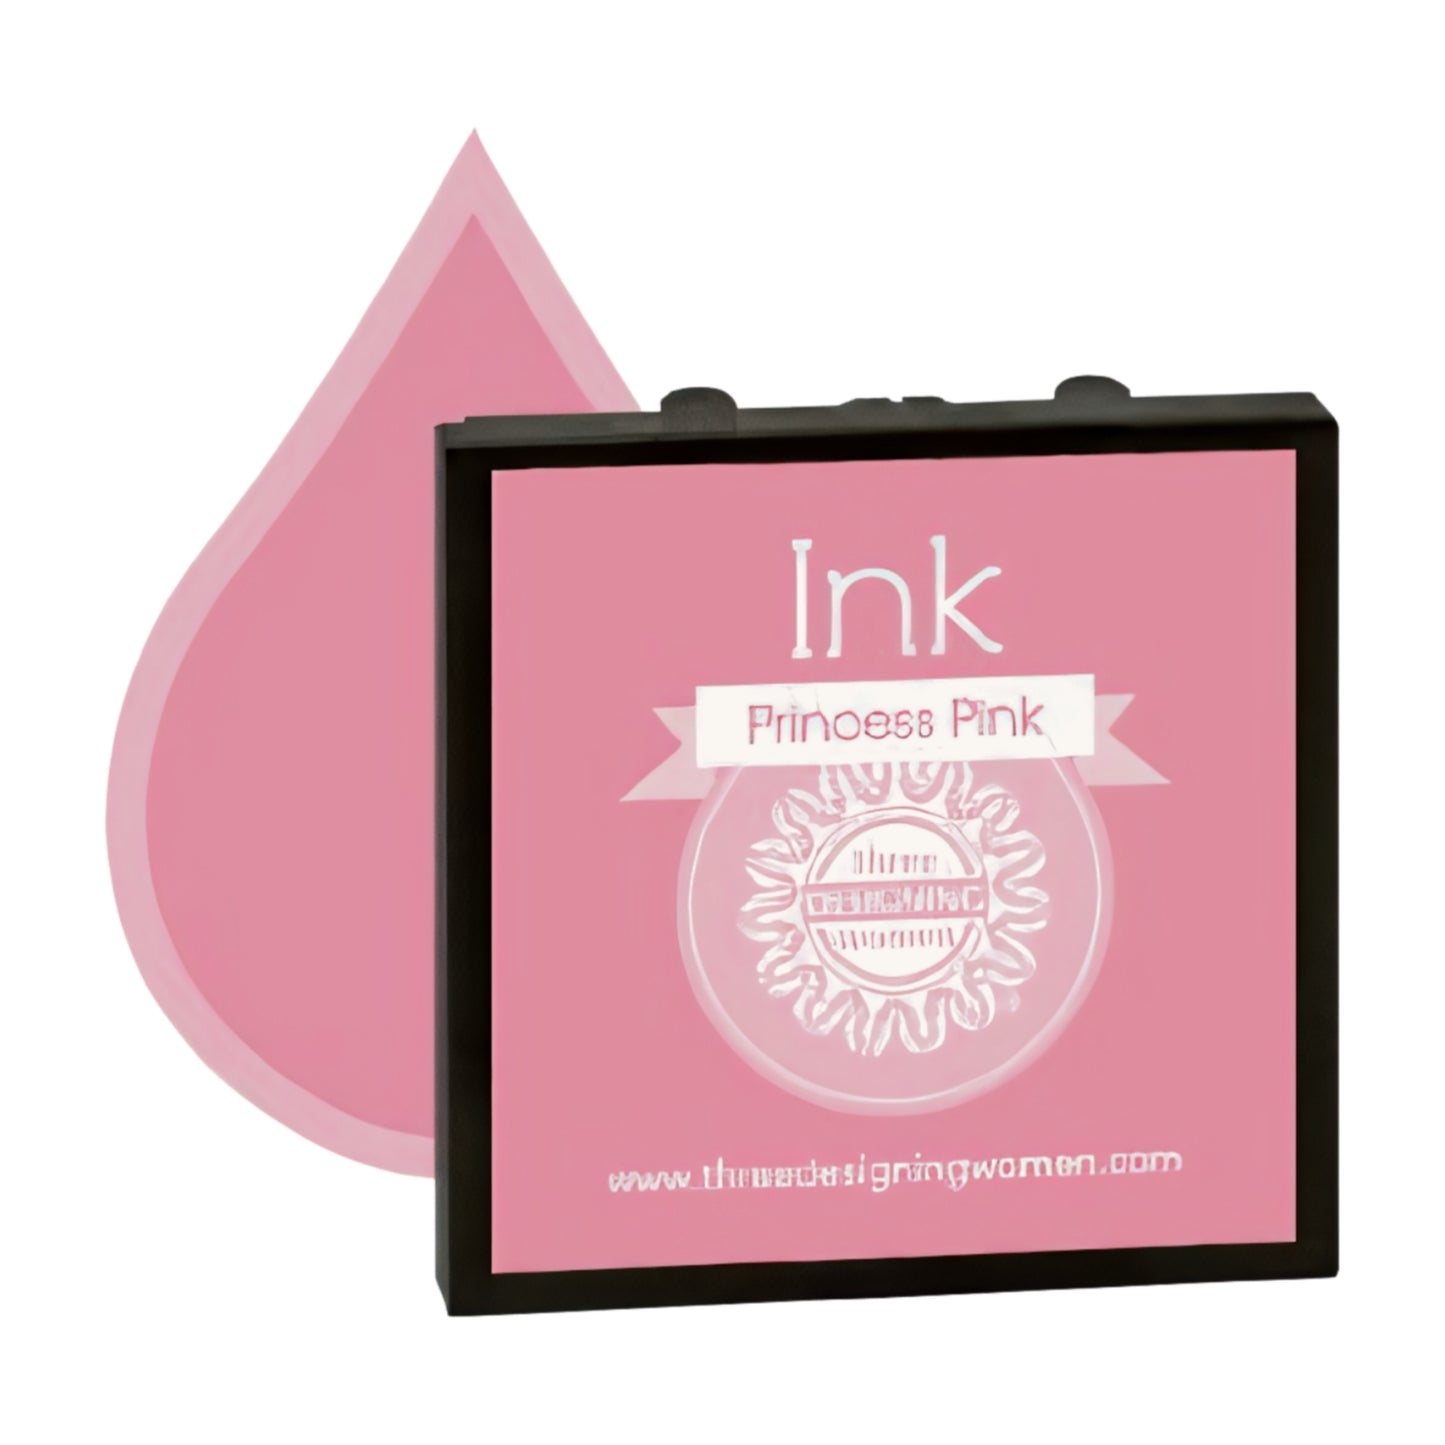 Ink Replacement Cartridge "Princess Pink" for Self-Inking Stampers Three Designing Women